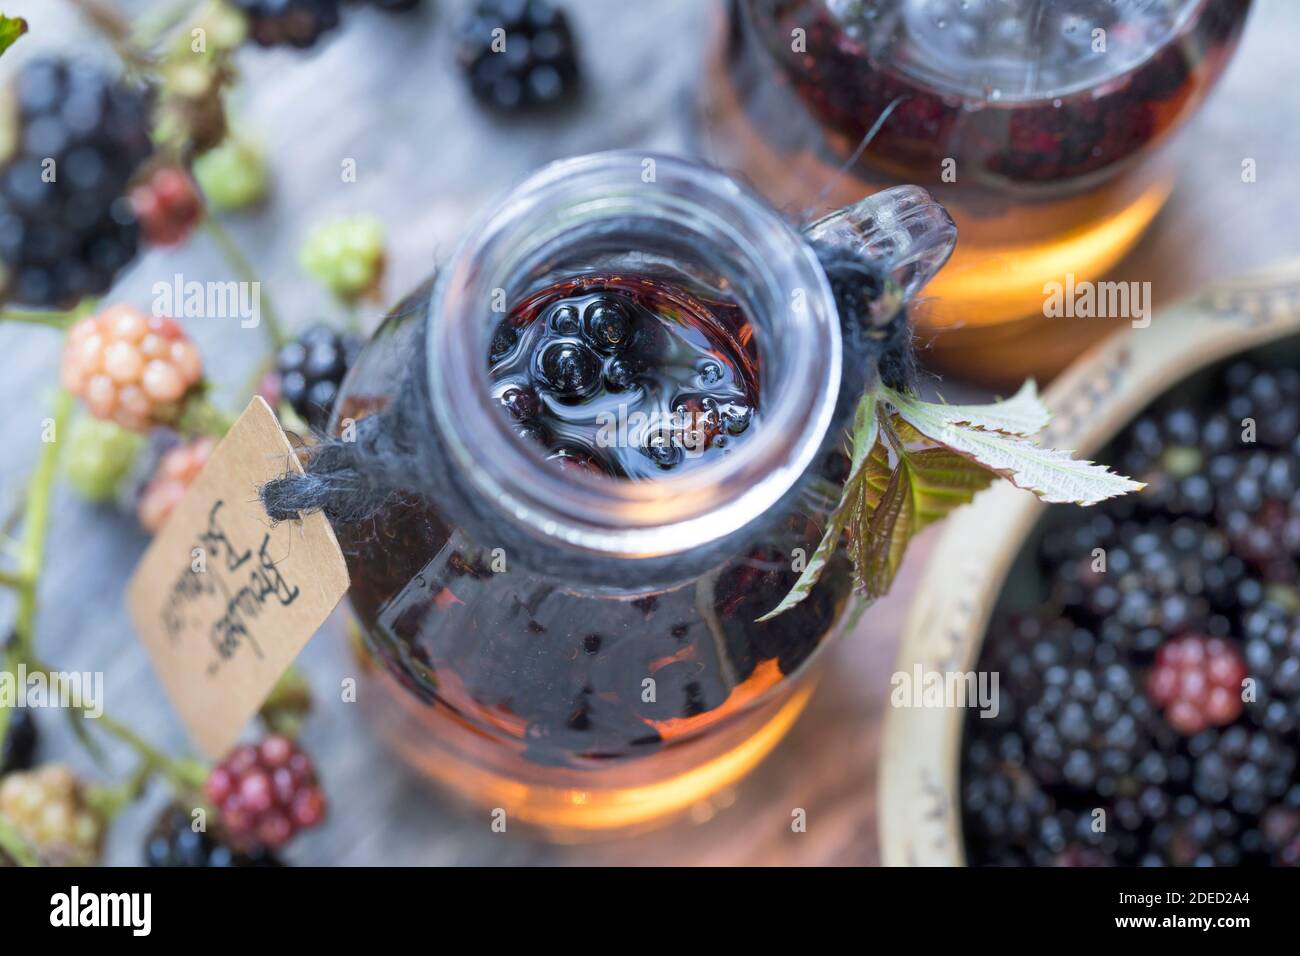 blackberry balsamico, blackberries are pickled in balsamic vinegar, Germany Stock Photo